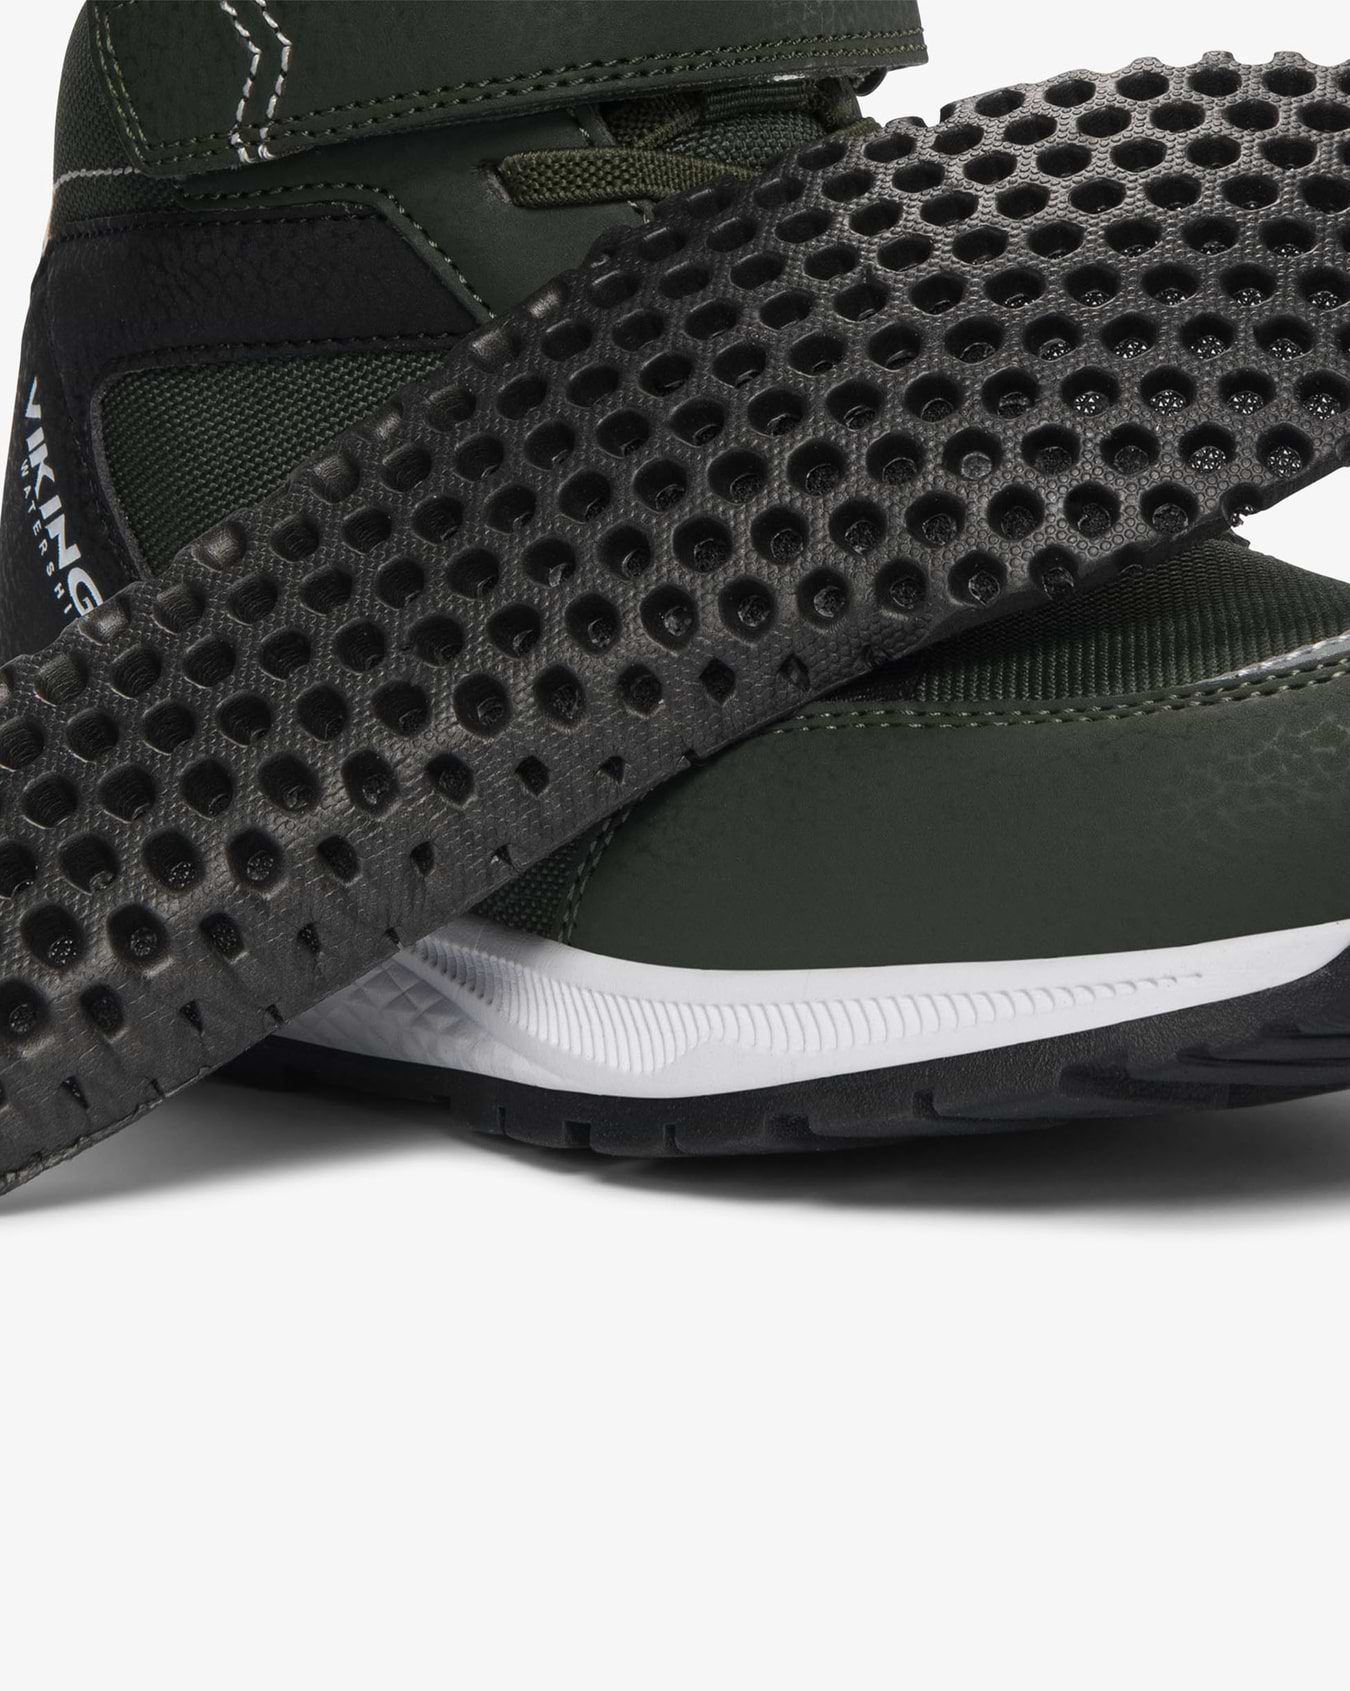 Viking Equip Jr Sneaker Green Waterproof Insulated Velcro